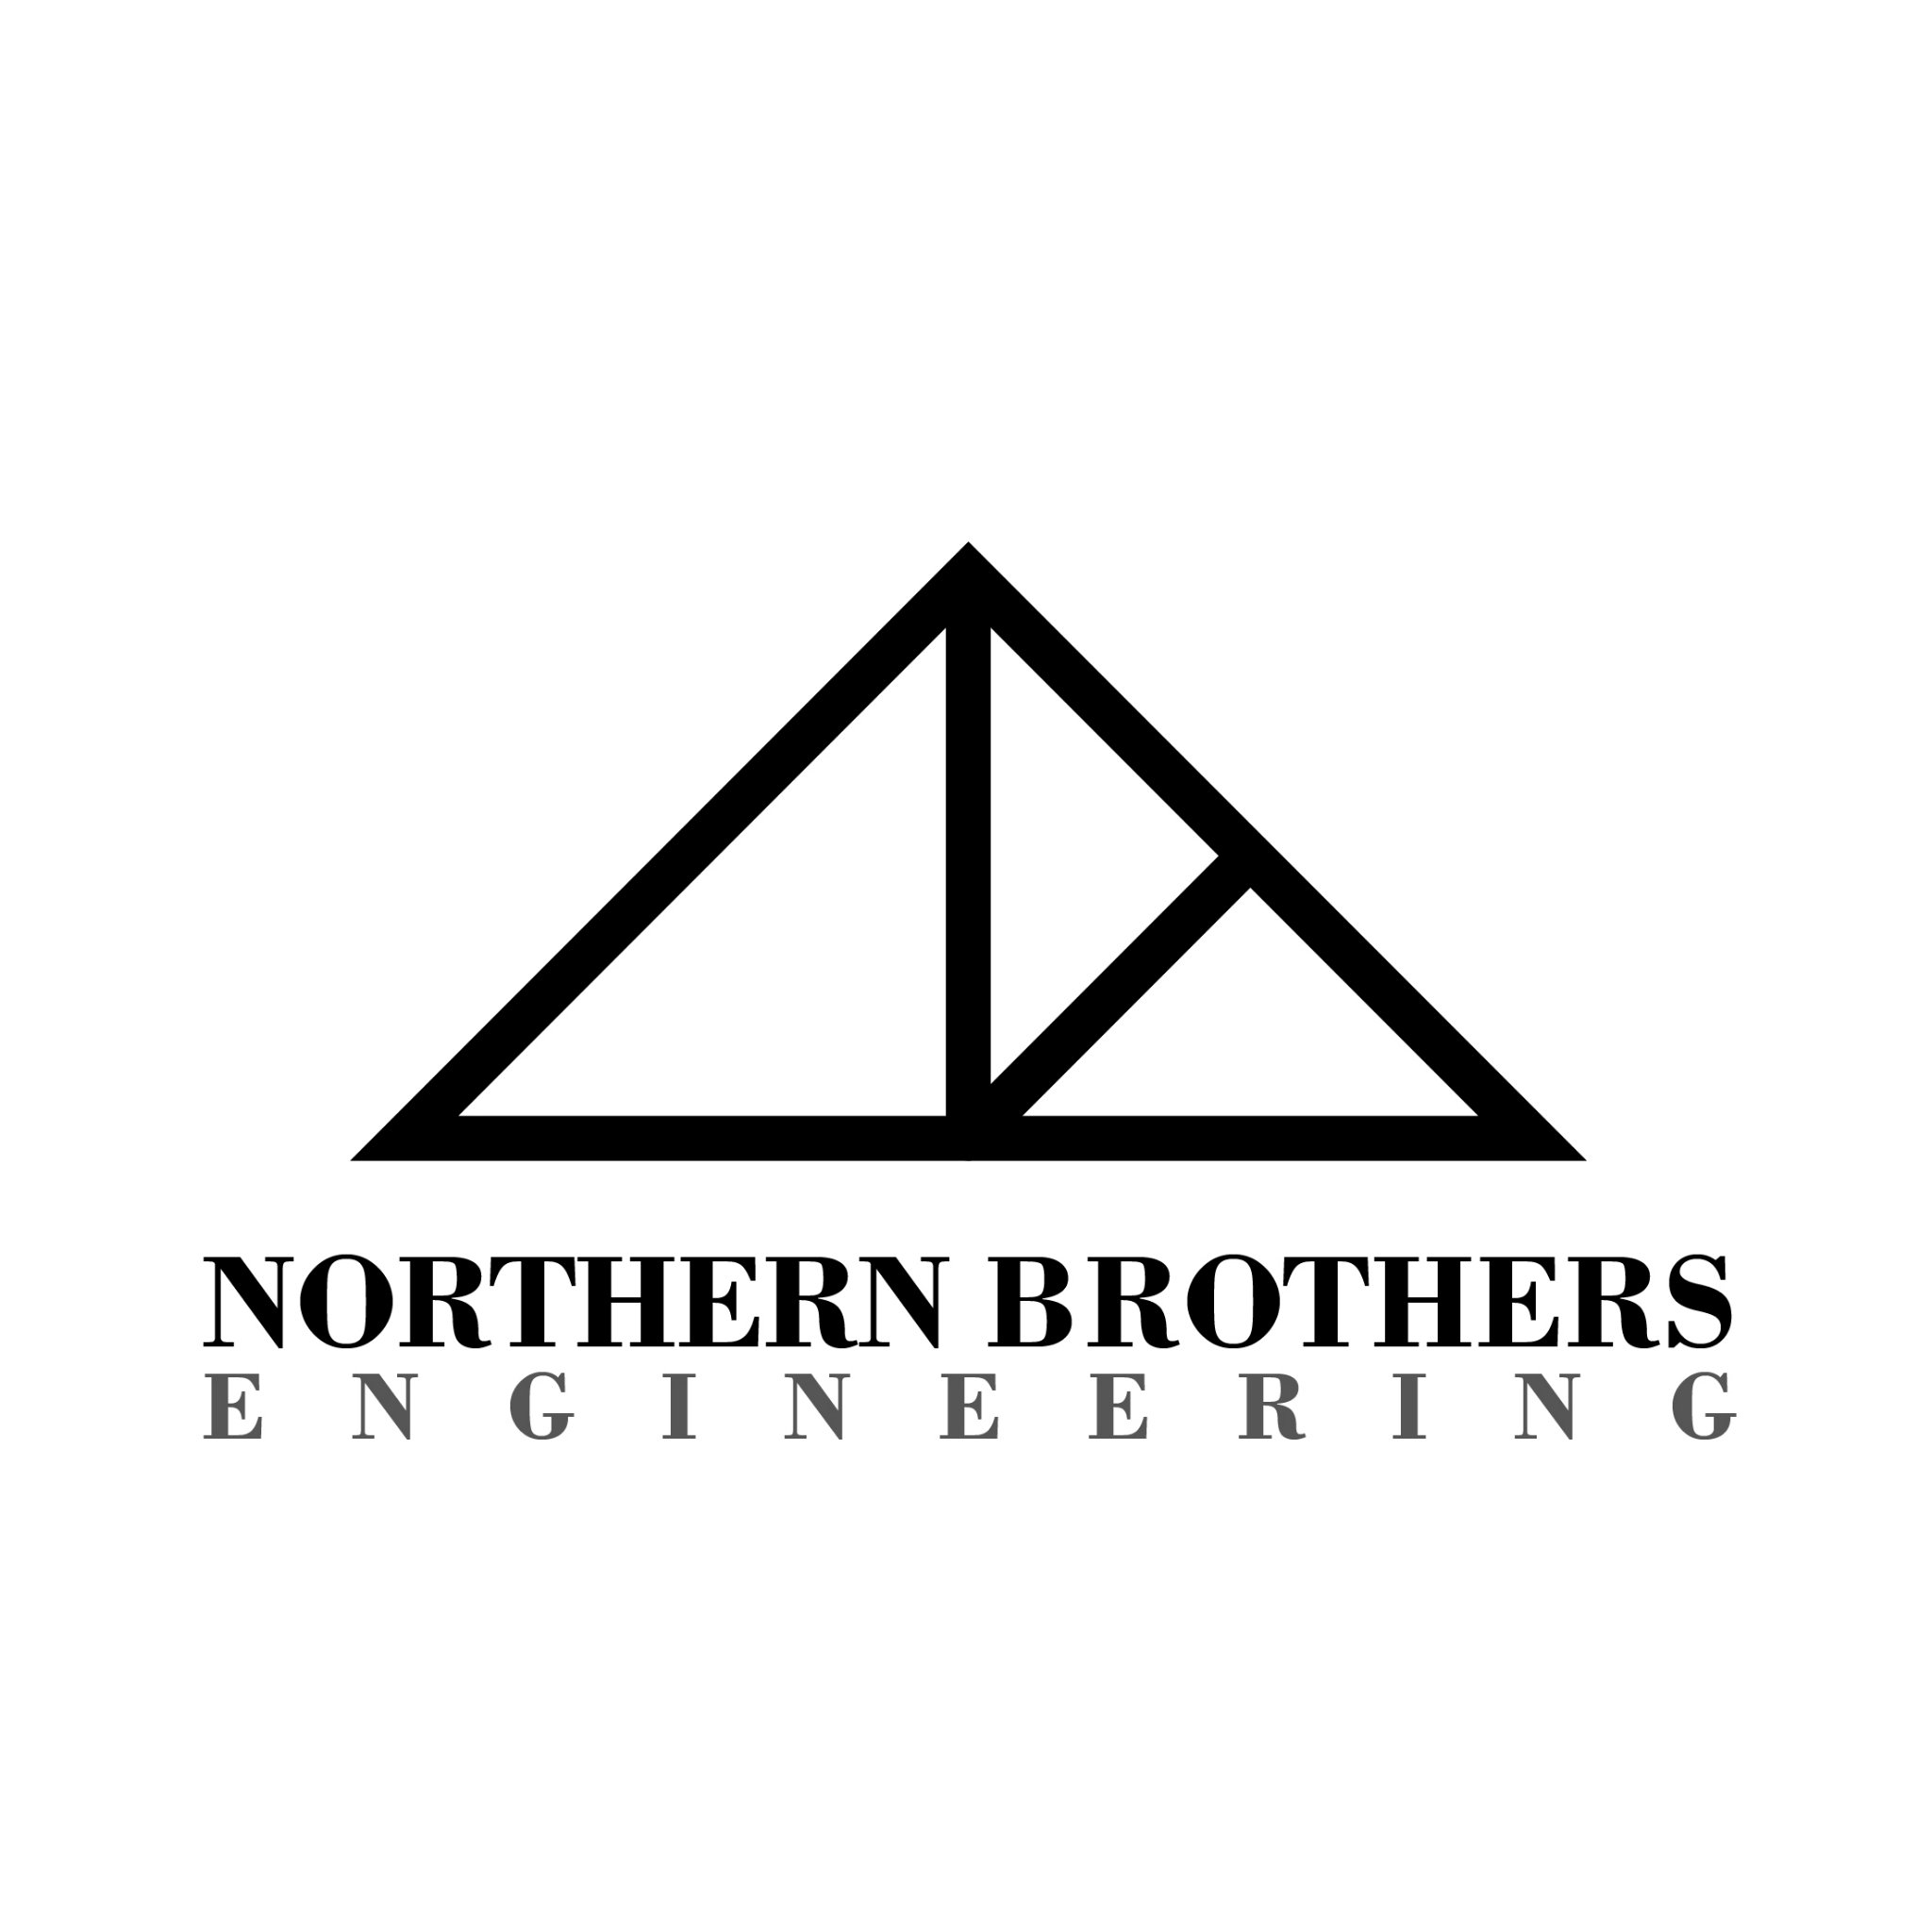 Northern Brothers Engineering